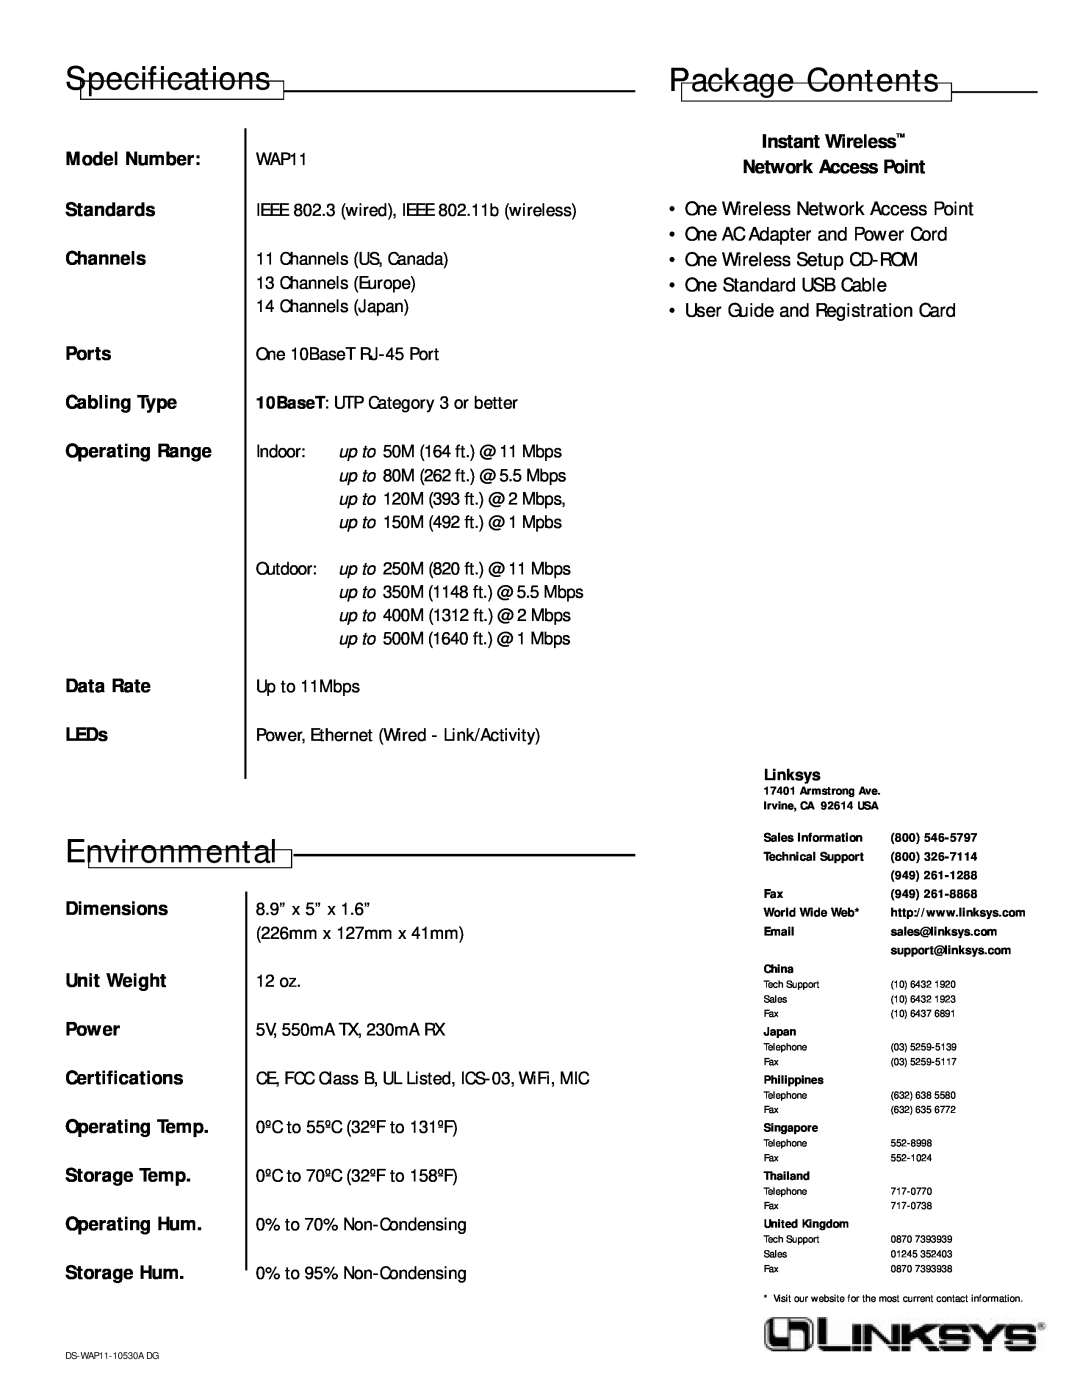 Linksys WAP11 warranty Specifications, Package Contents, Environmental 